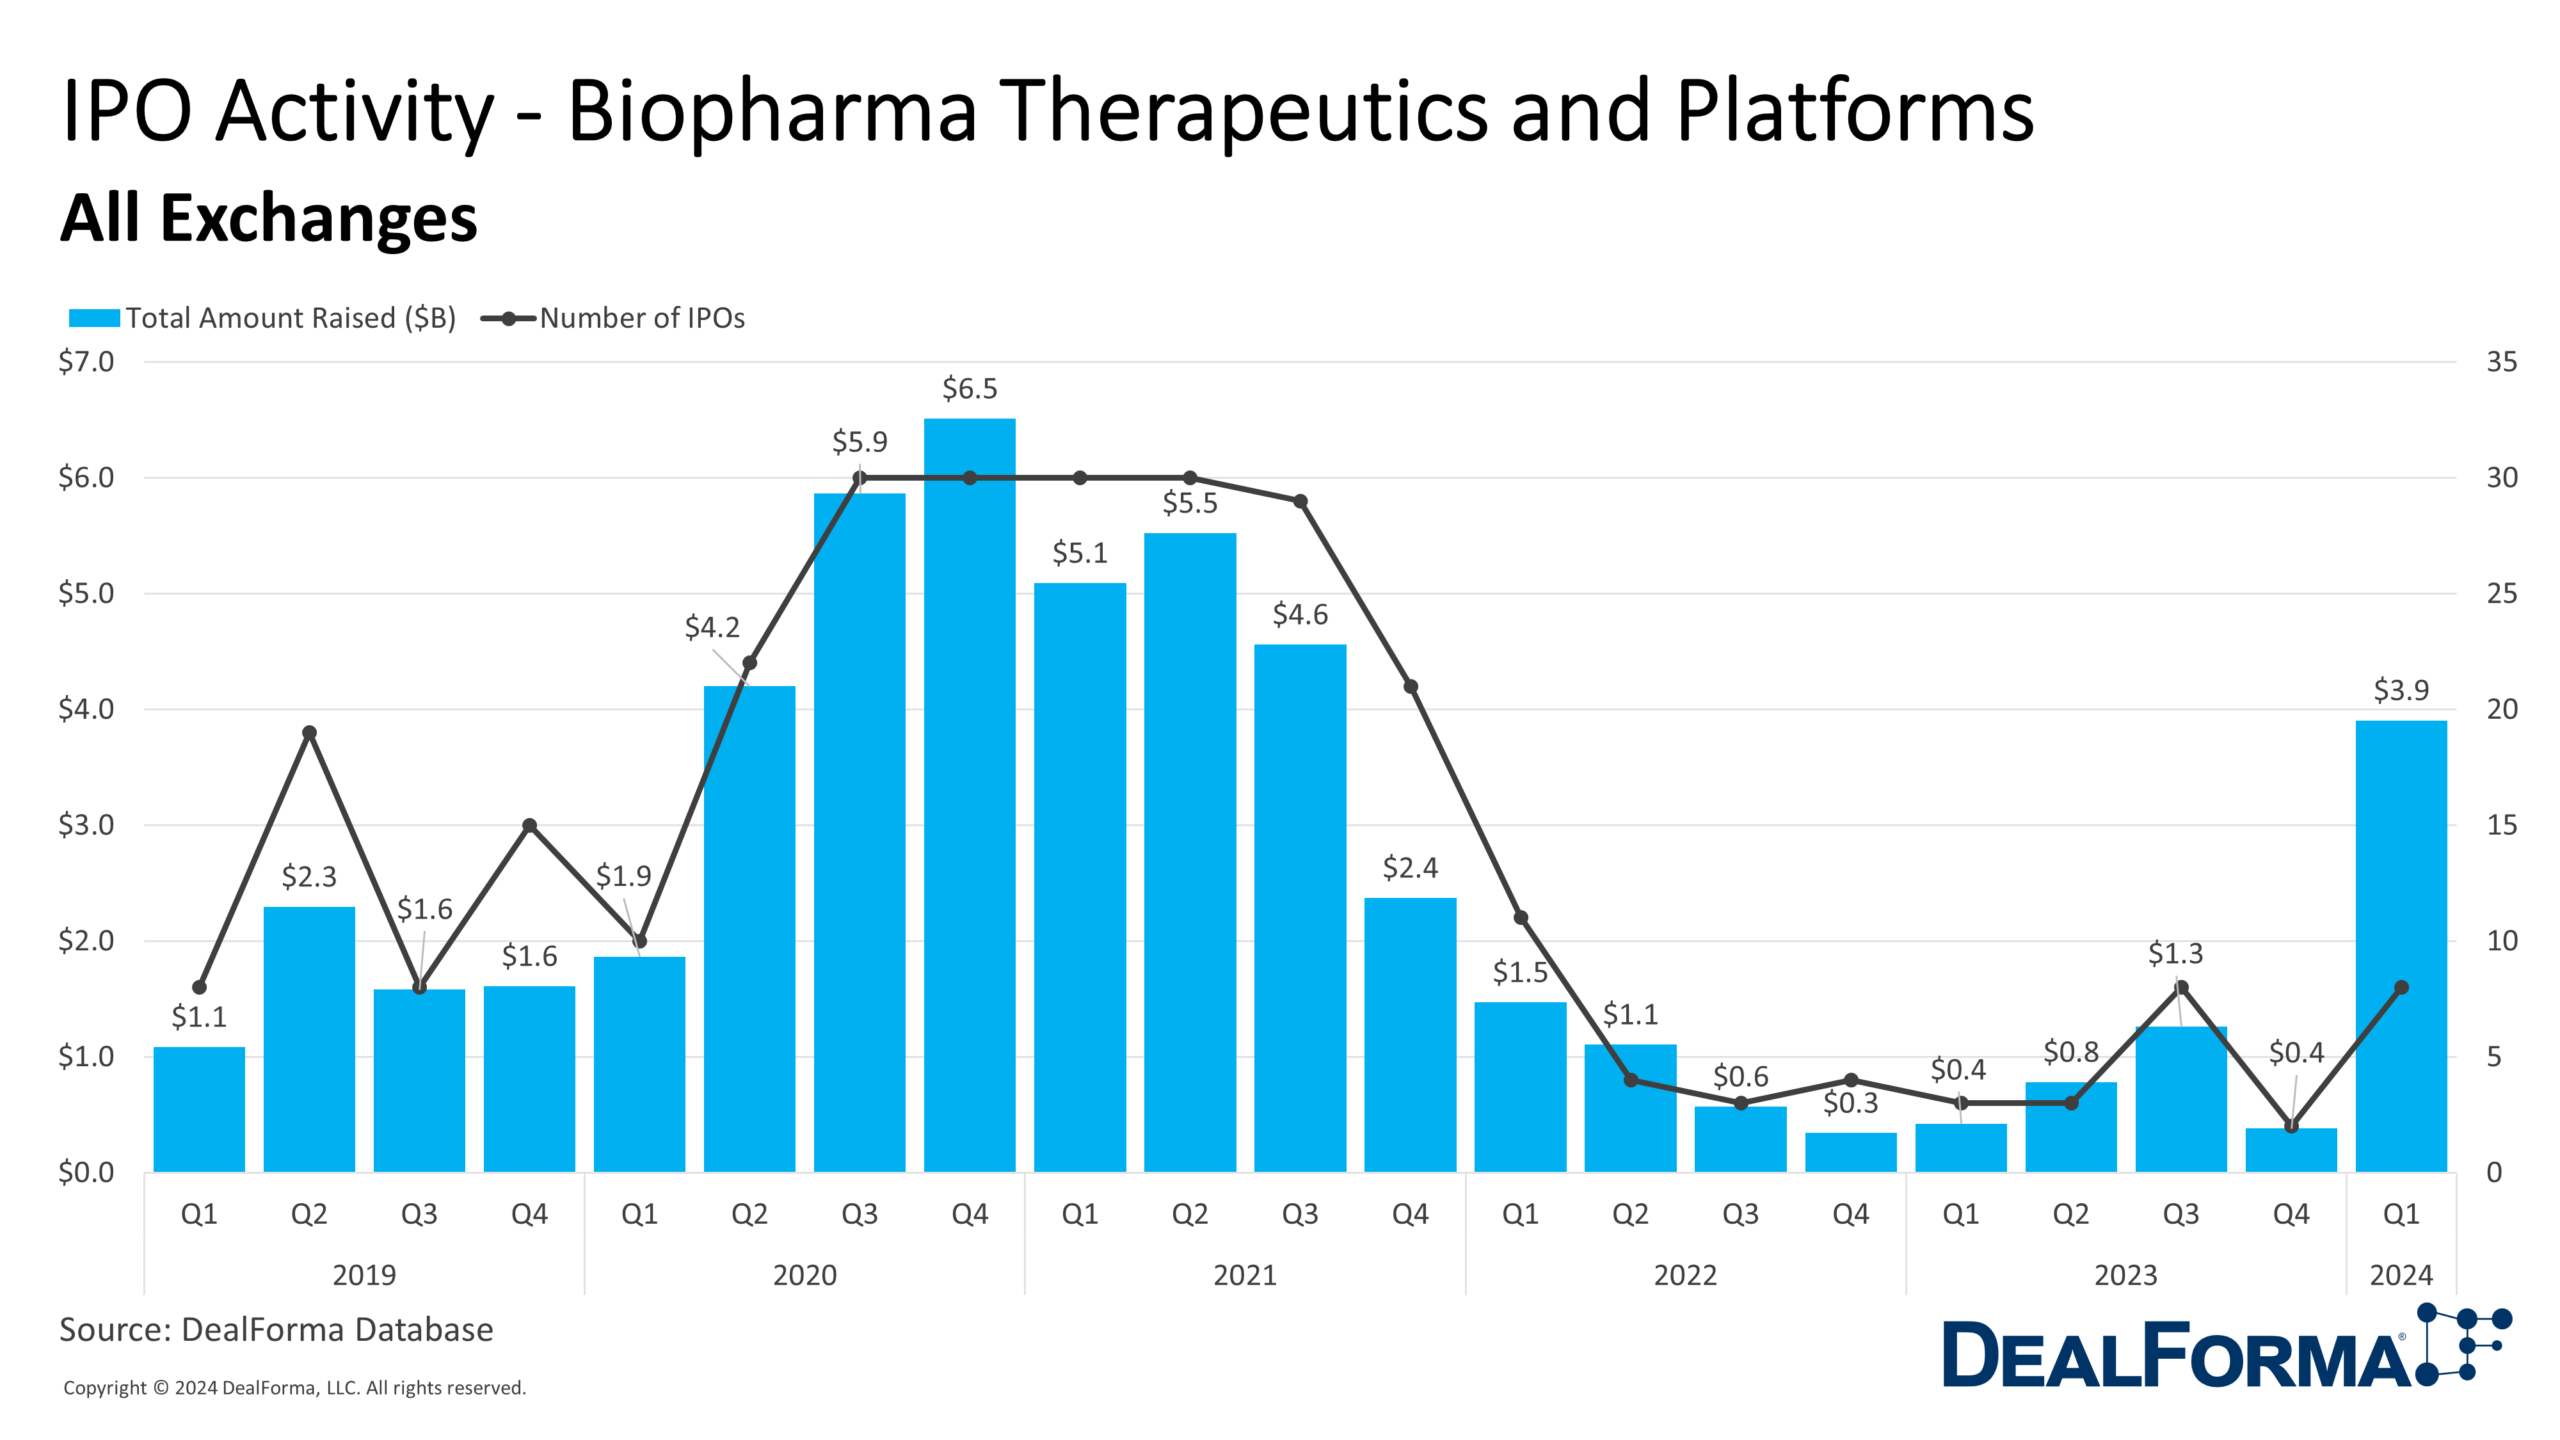 R&D Partnerships - Biopharma Tx and Platforms